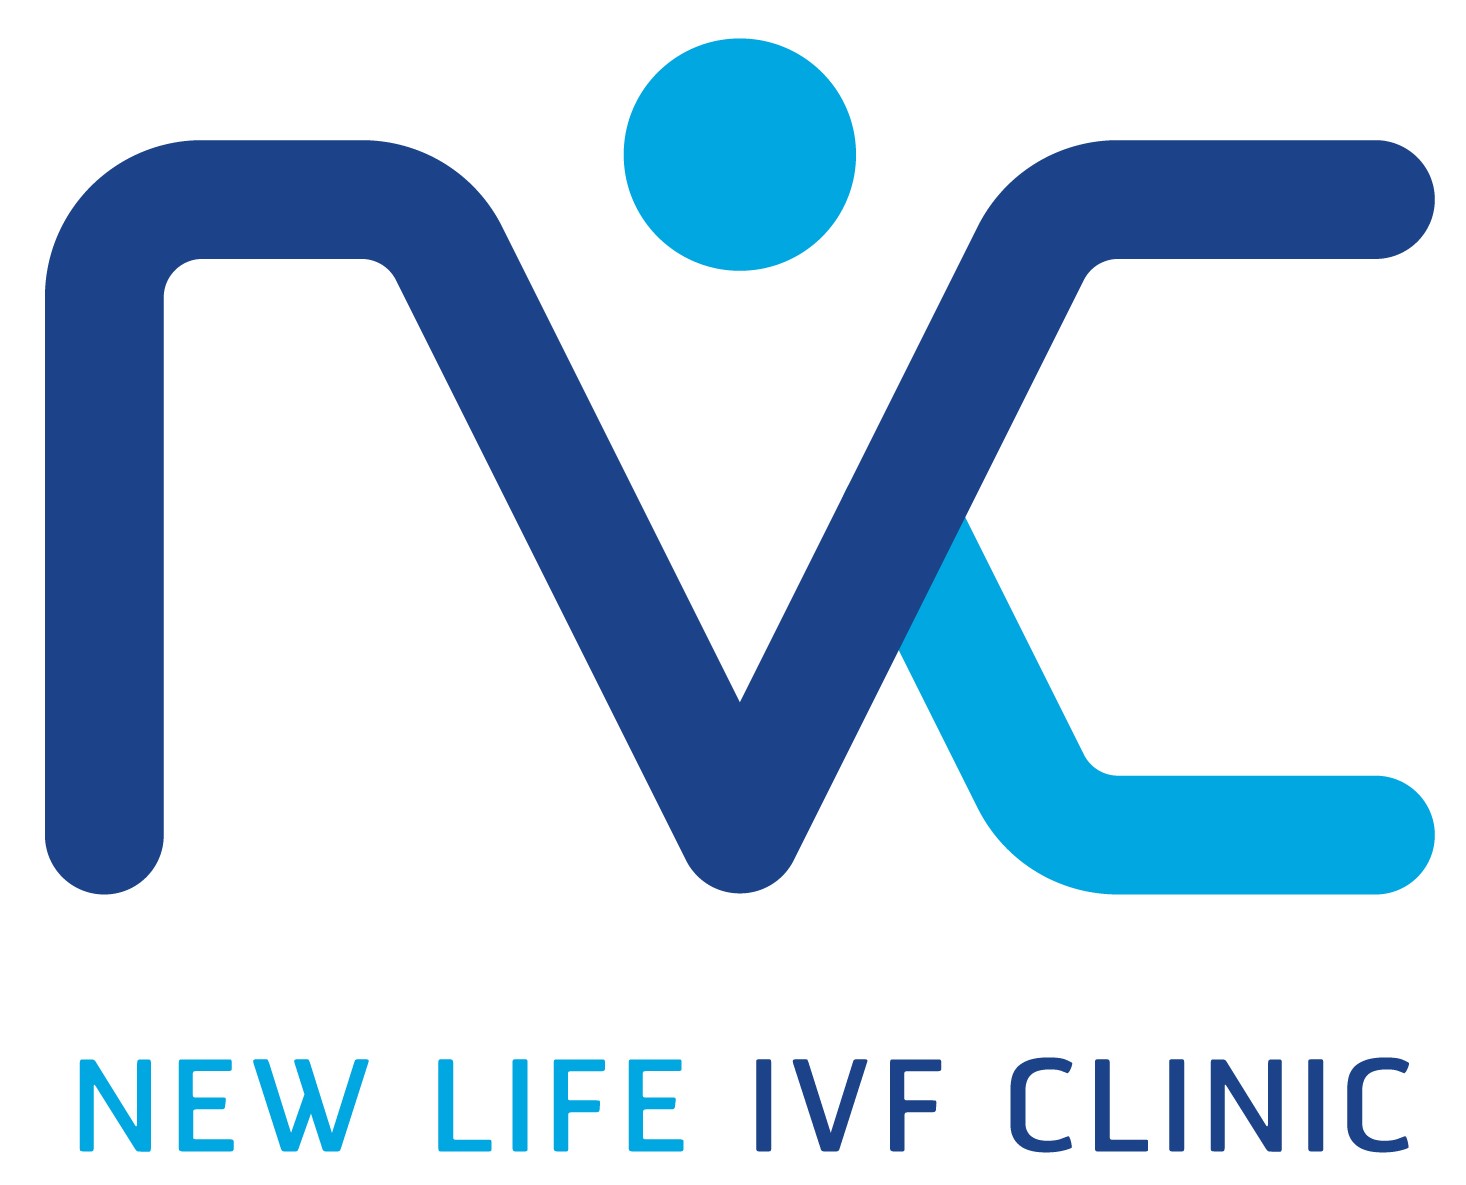 NEW LIFE IVF CLINIC logo โลโก้